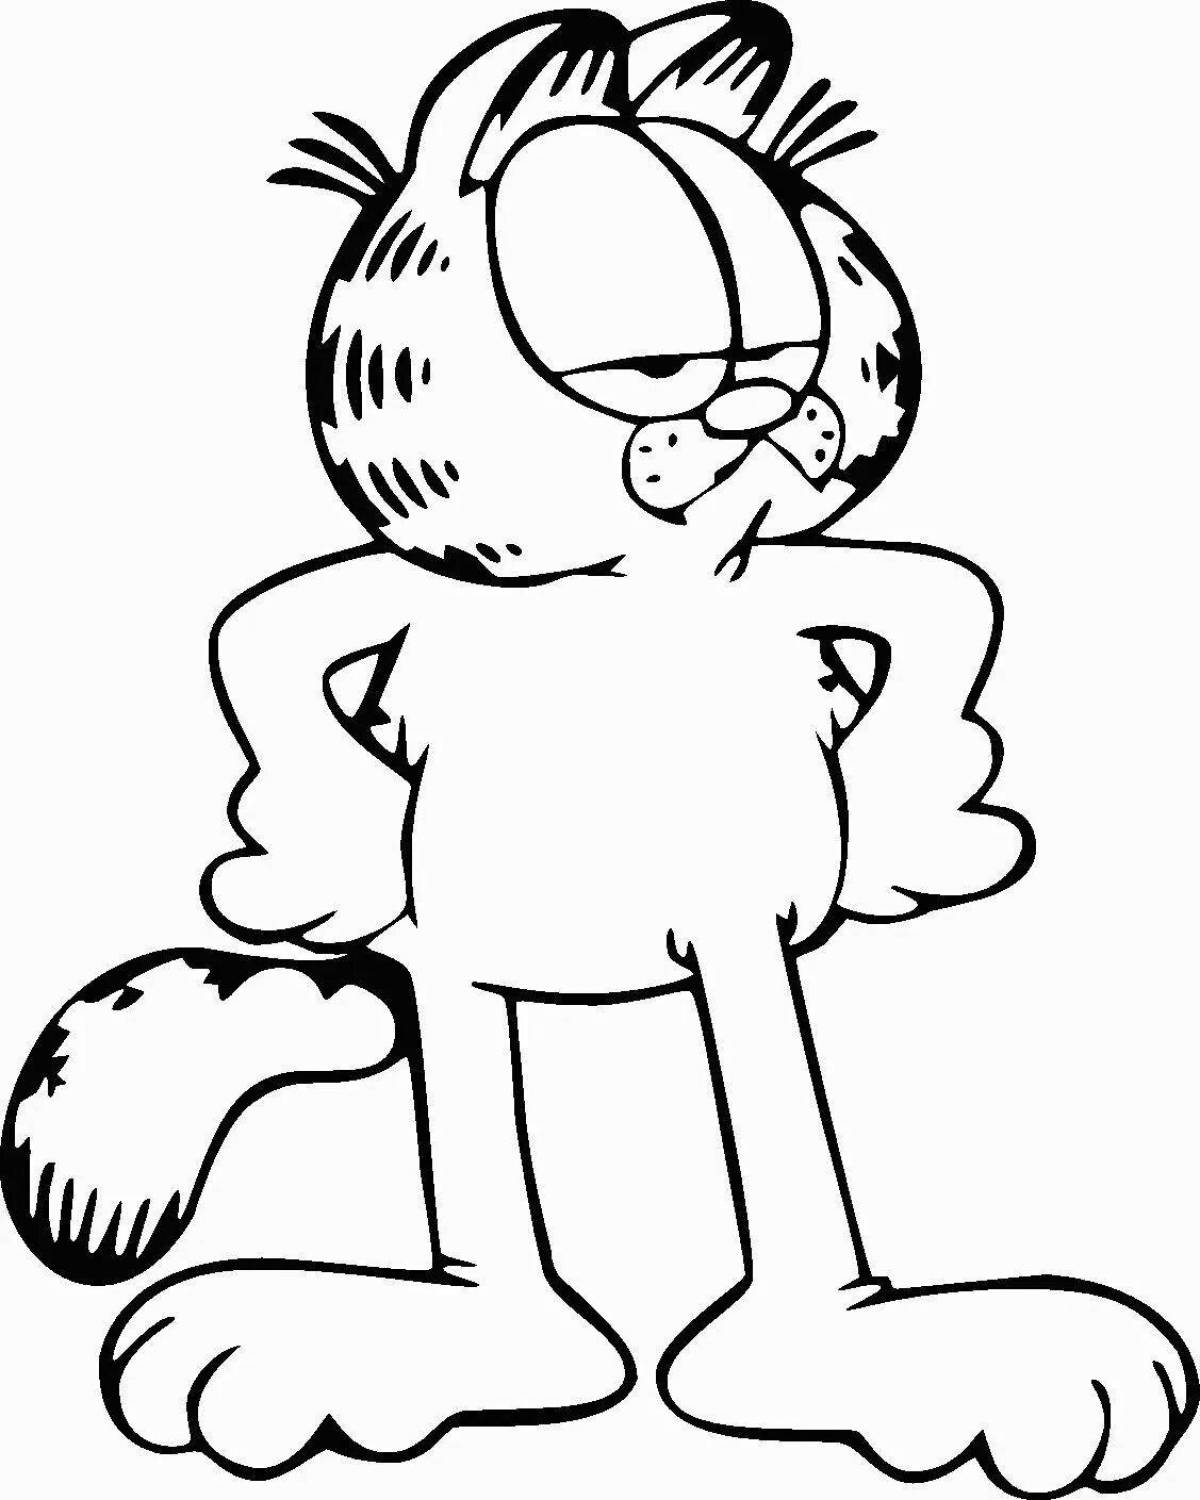 Раскраска милая кошка гарфилд